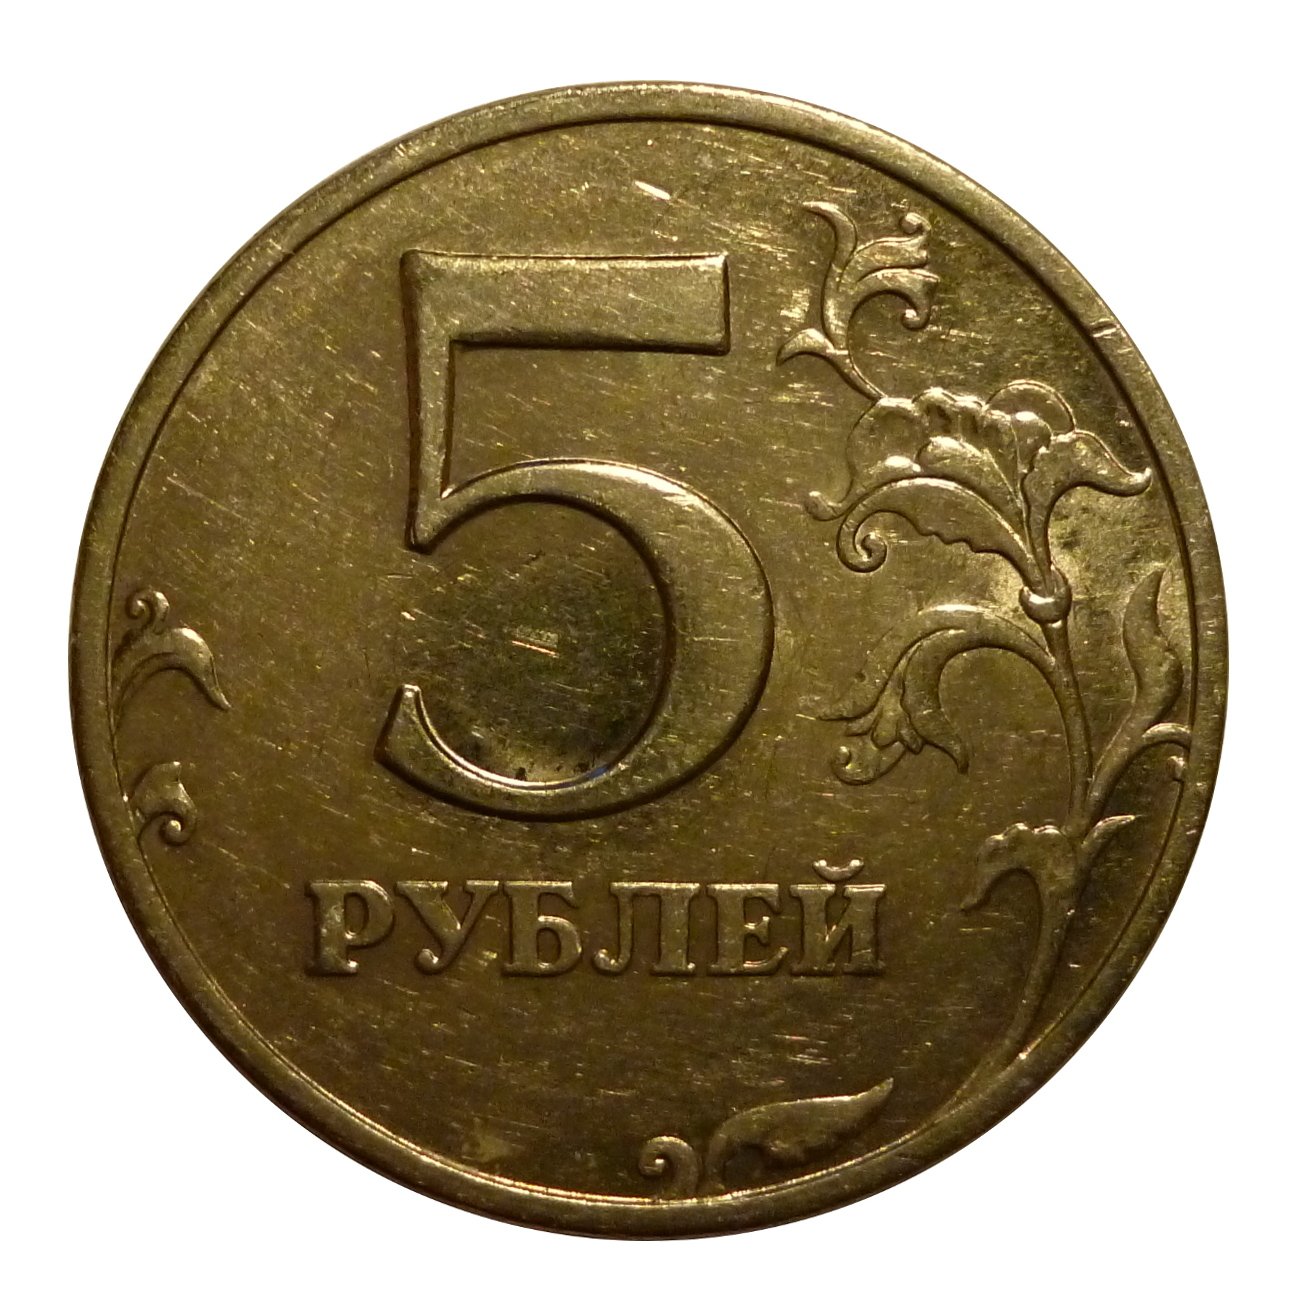 5 рублей хватит. Монета 5 рублей. Монетка 5 рублей. Пять рублей монета. Монета 5 рублей для детей.